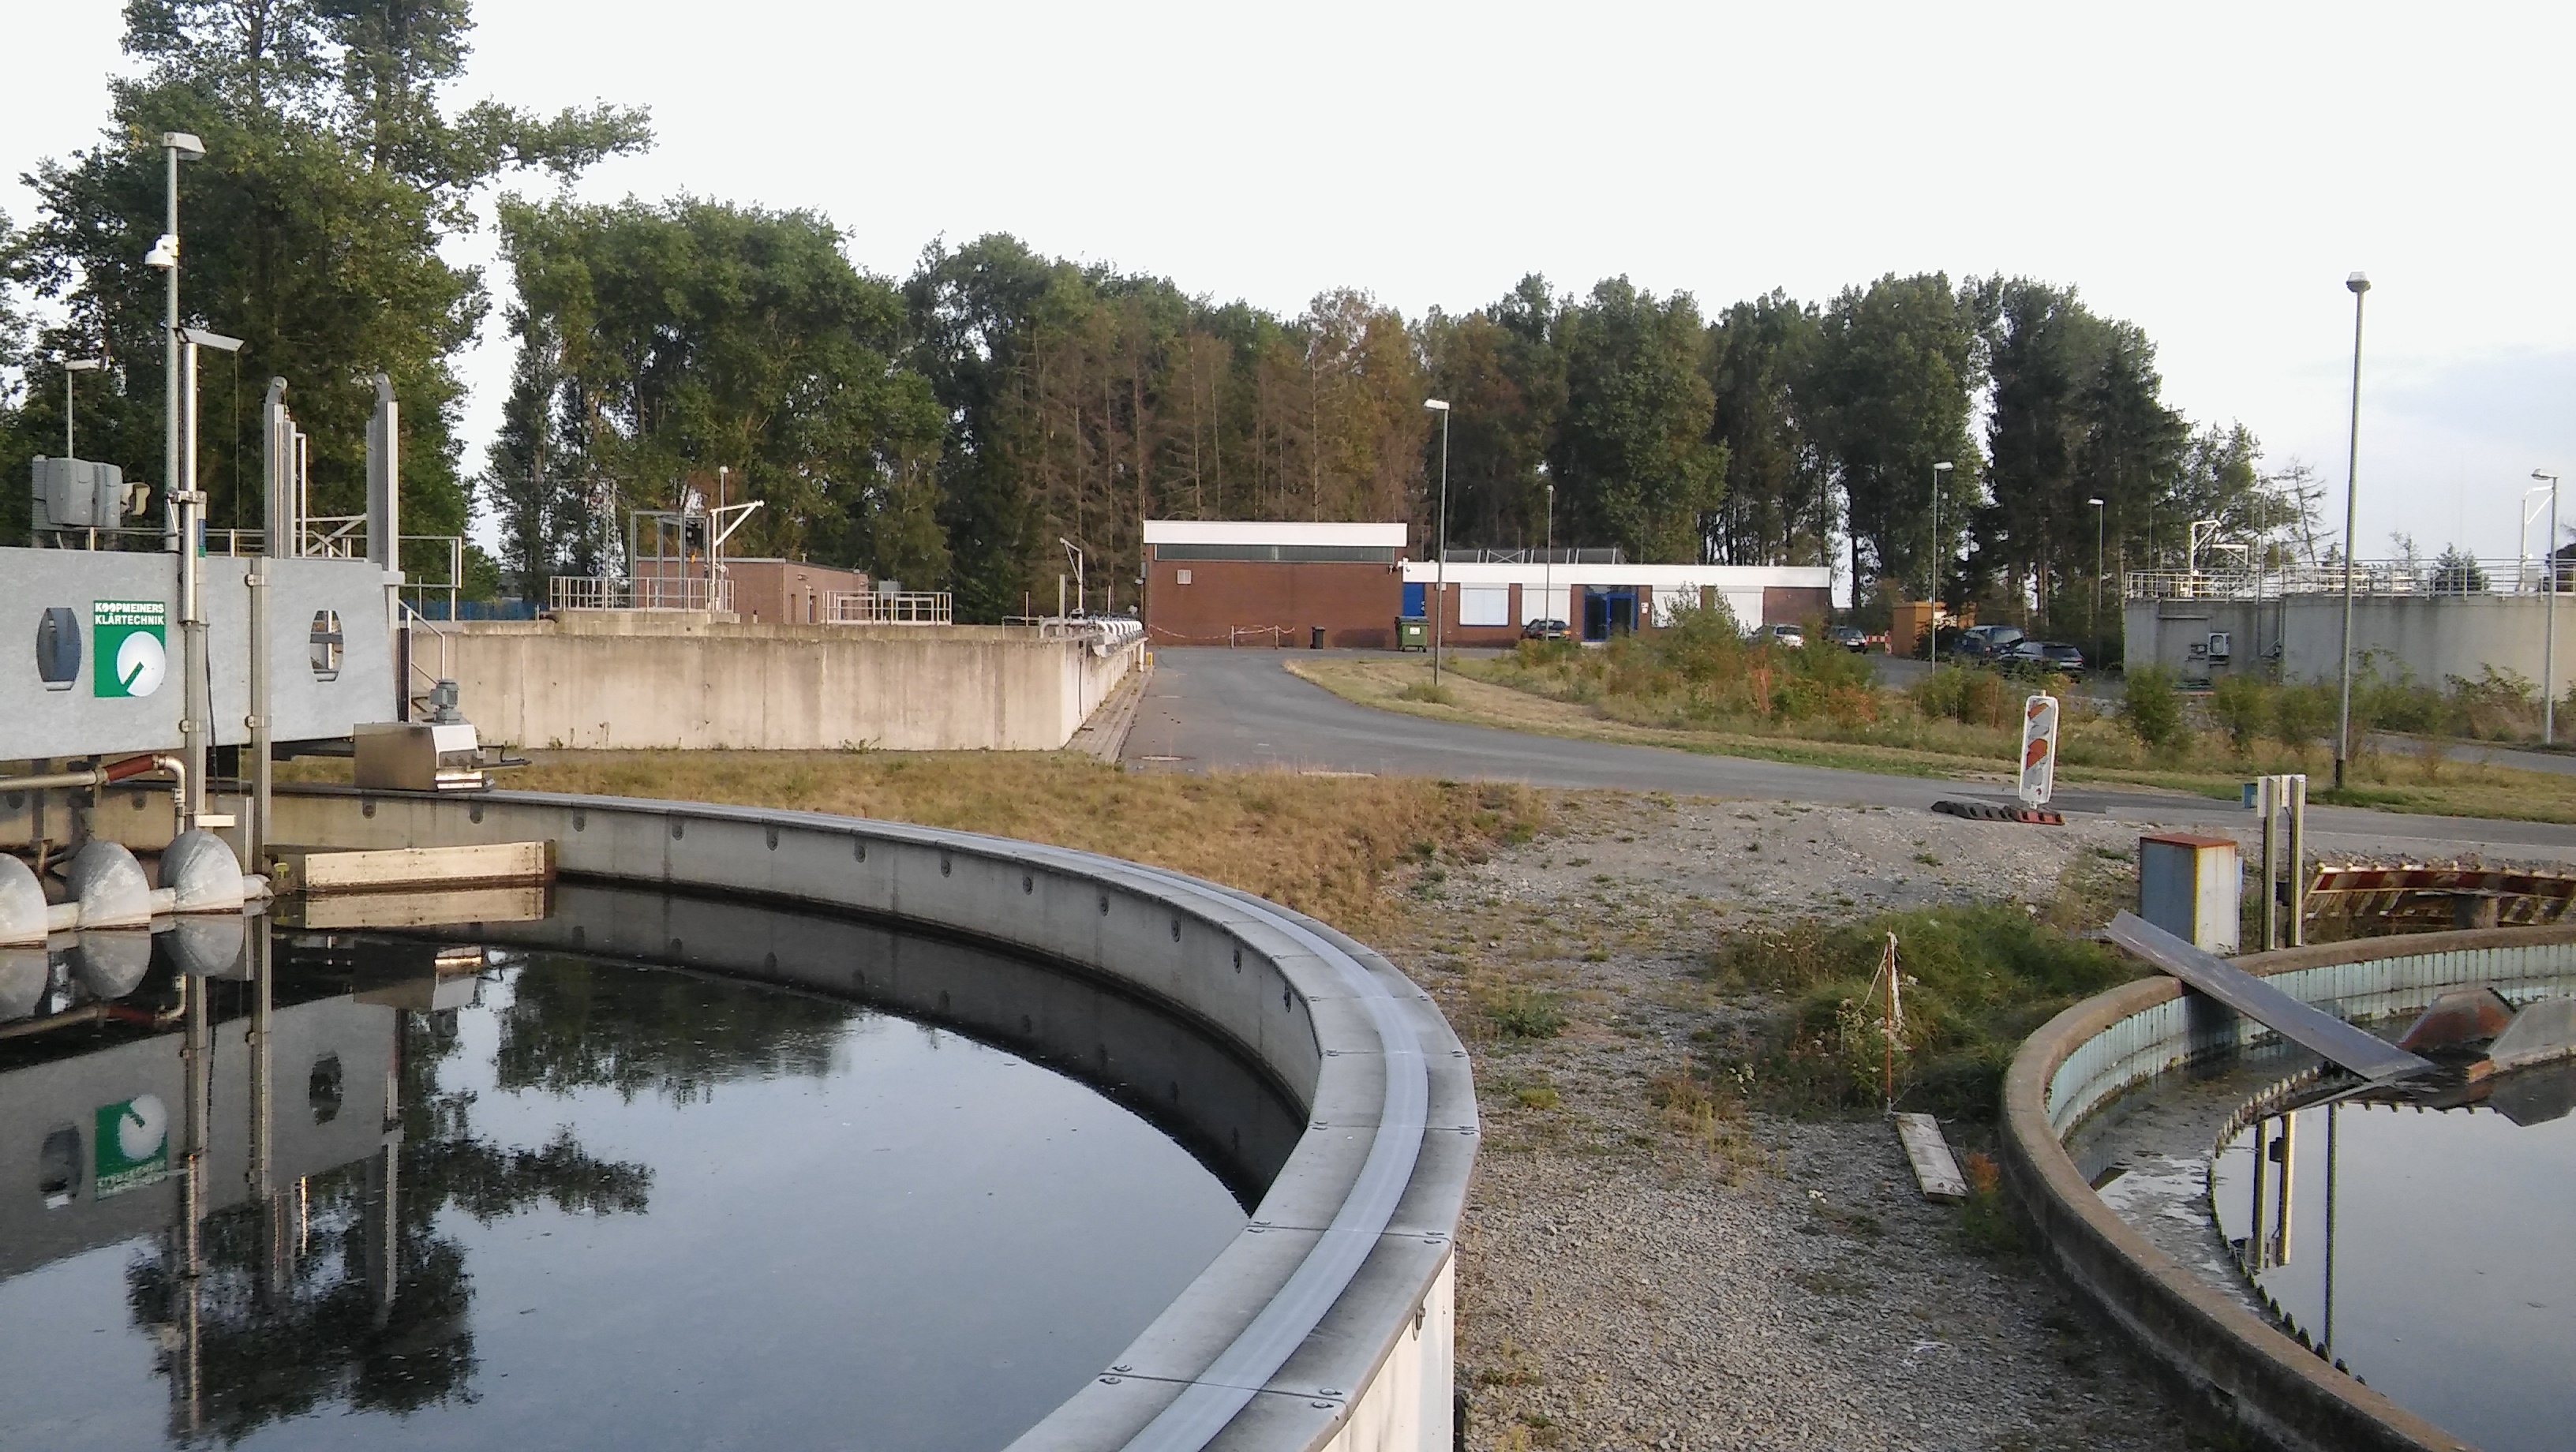 The Wolfsburg-Hattorf wastewater treatment plant piloted wastewater treatment and a hydroponic system between 2017 and 2019.